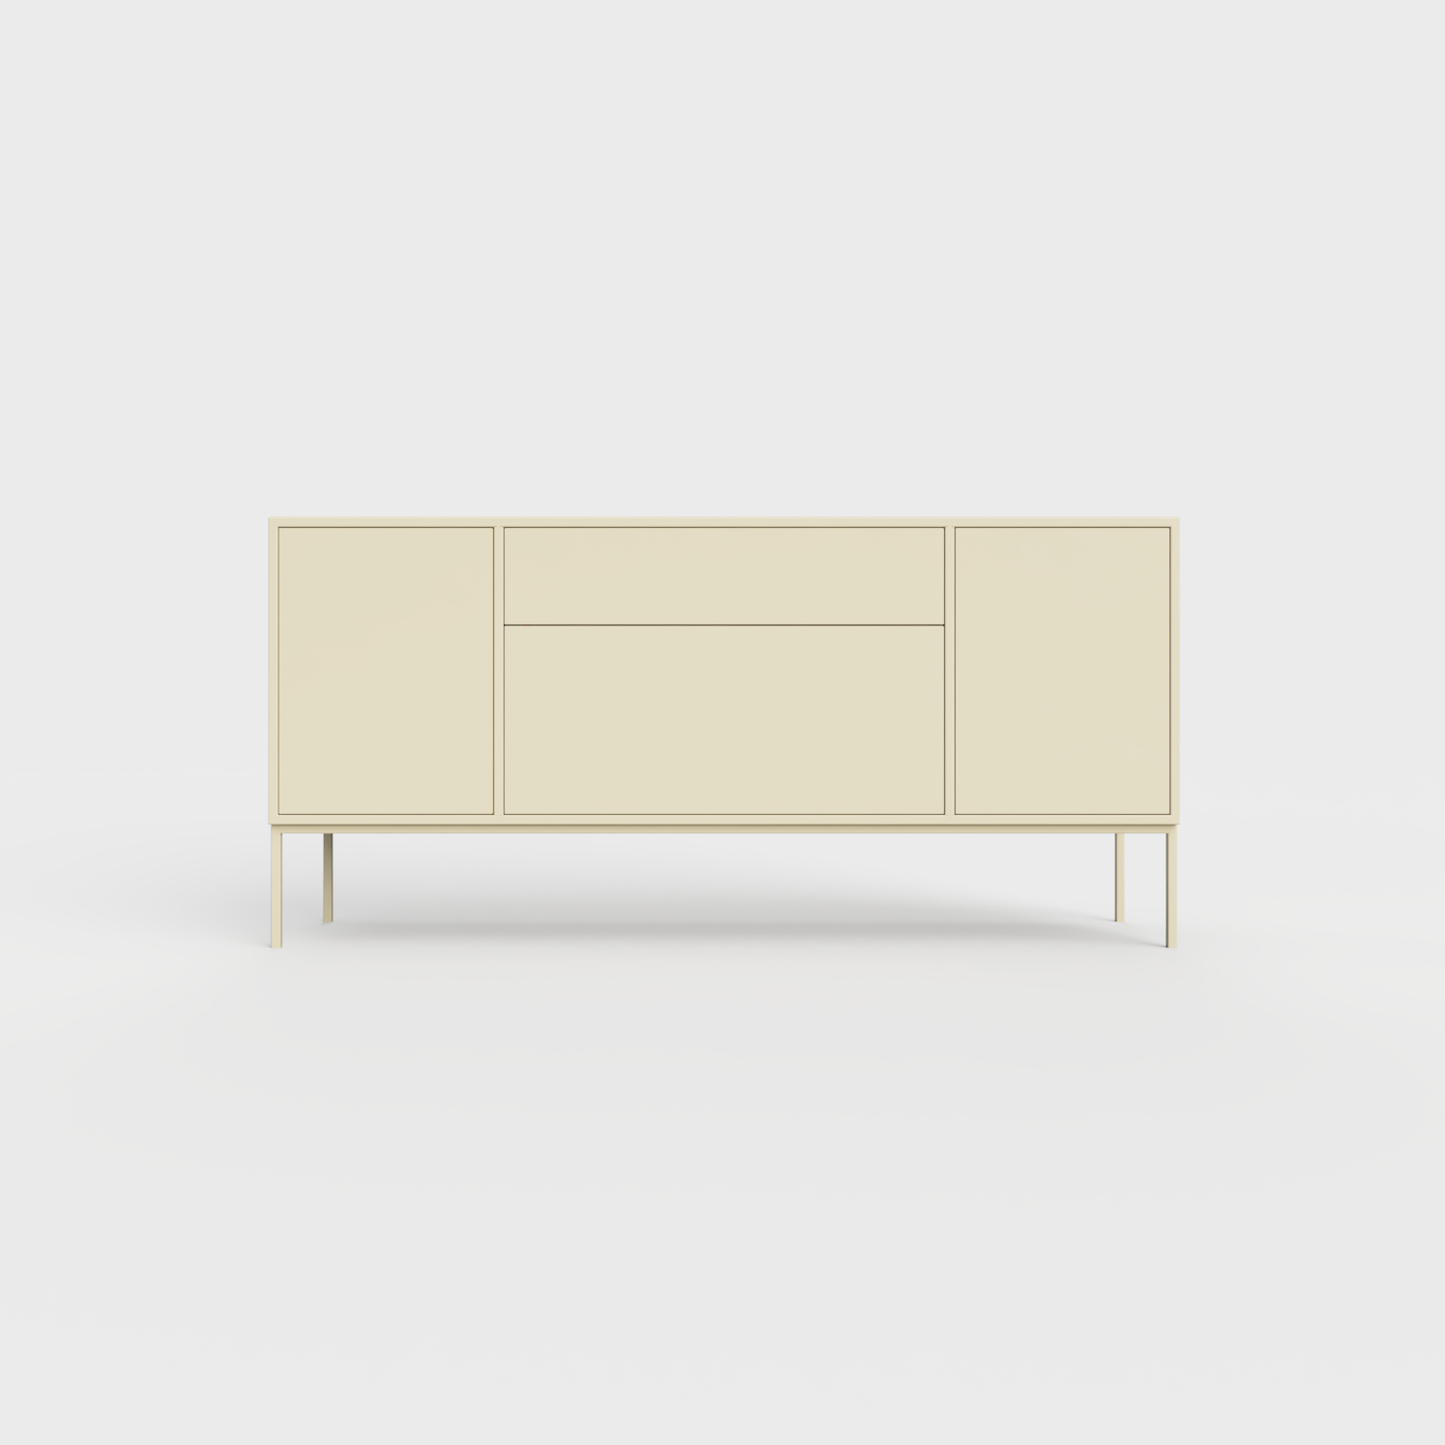 Arnika 02 Sideboard in Dark Ecru color, powder-coated steel, elegant and modern piece of furniture for your living room